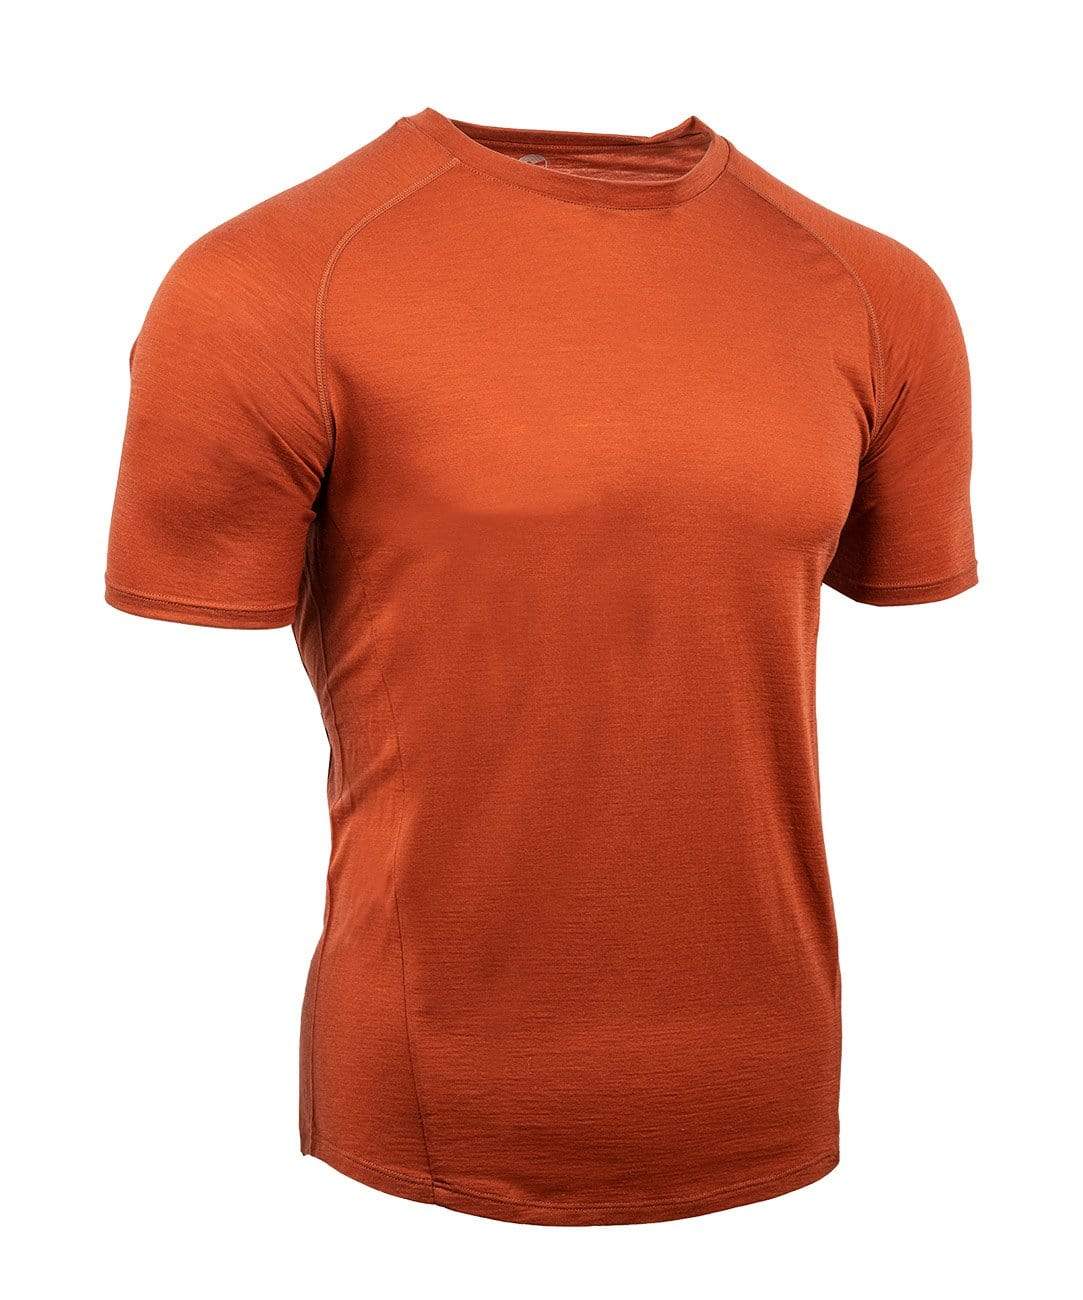 Men's Apex Merino Tech T-Shirt